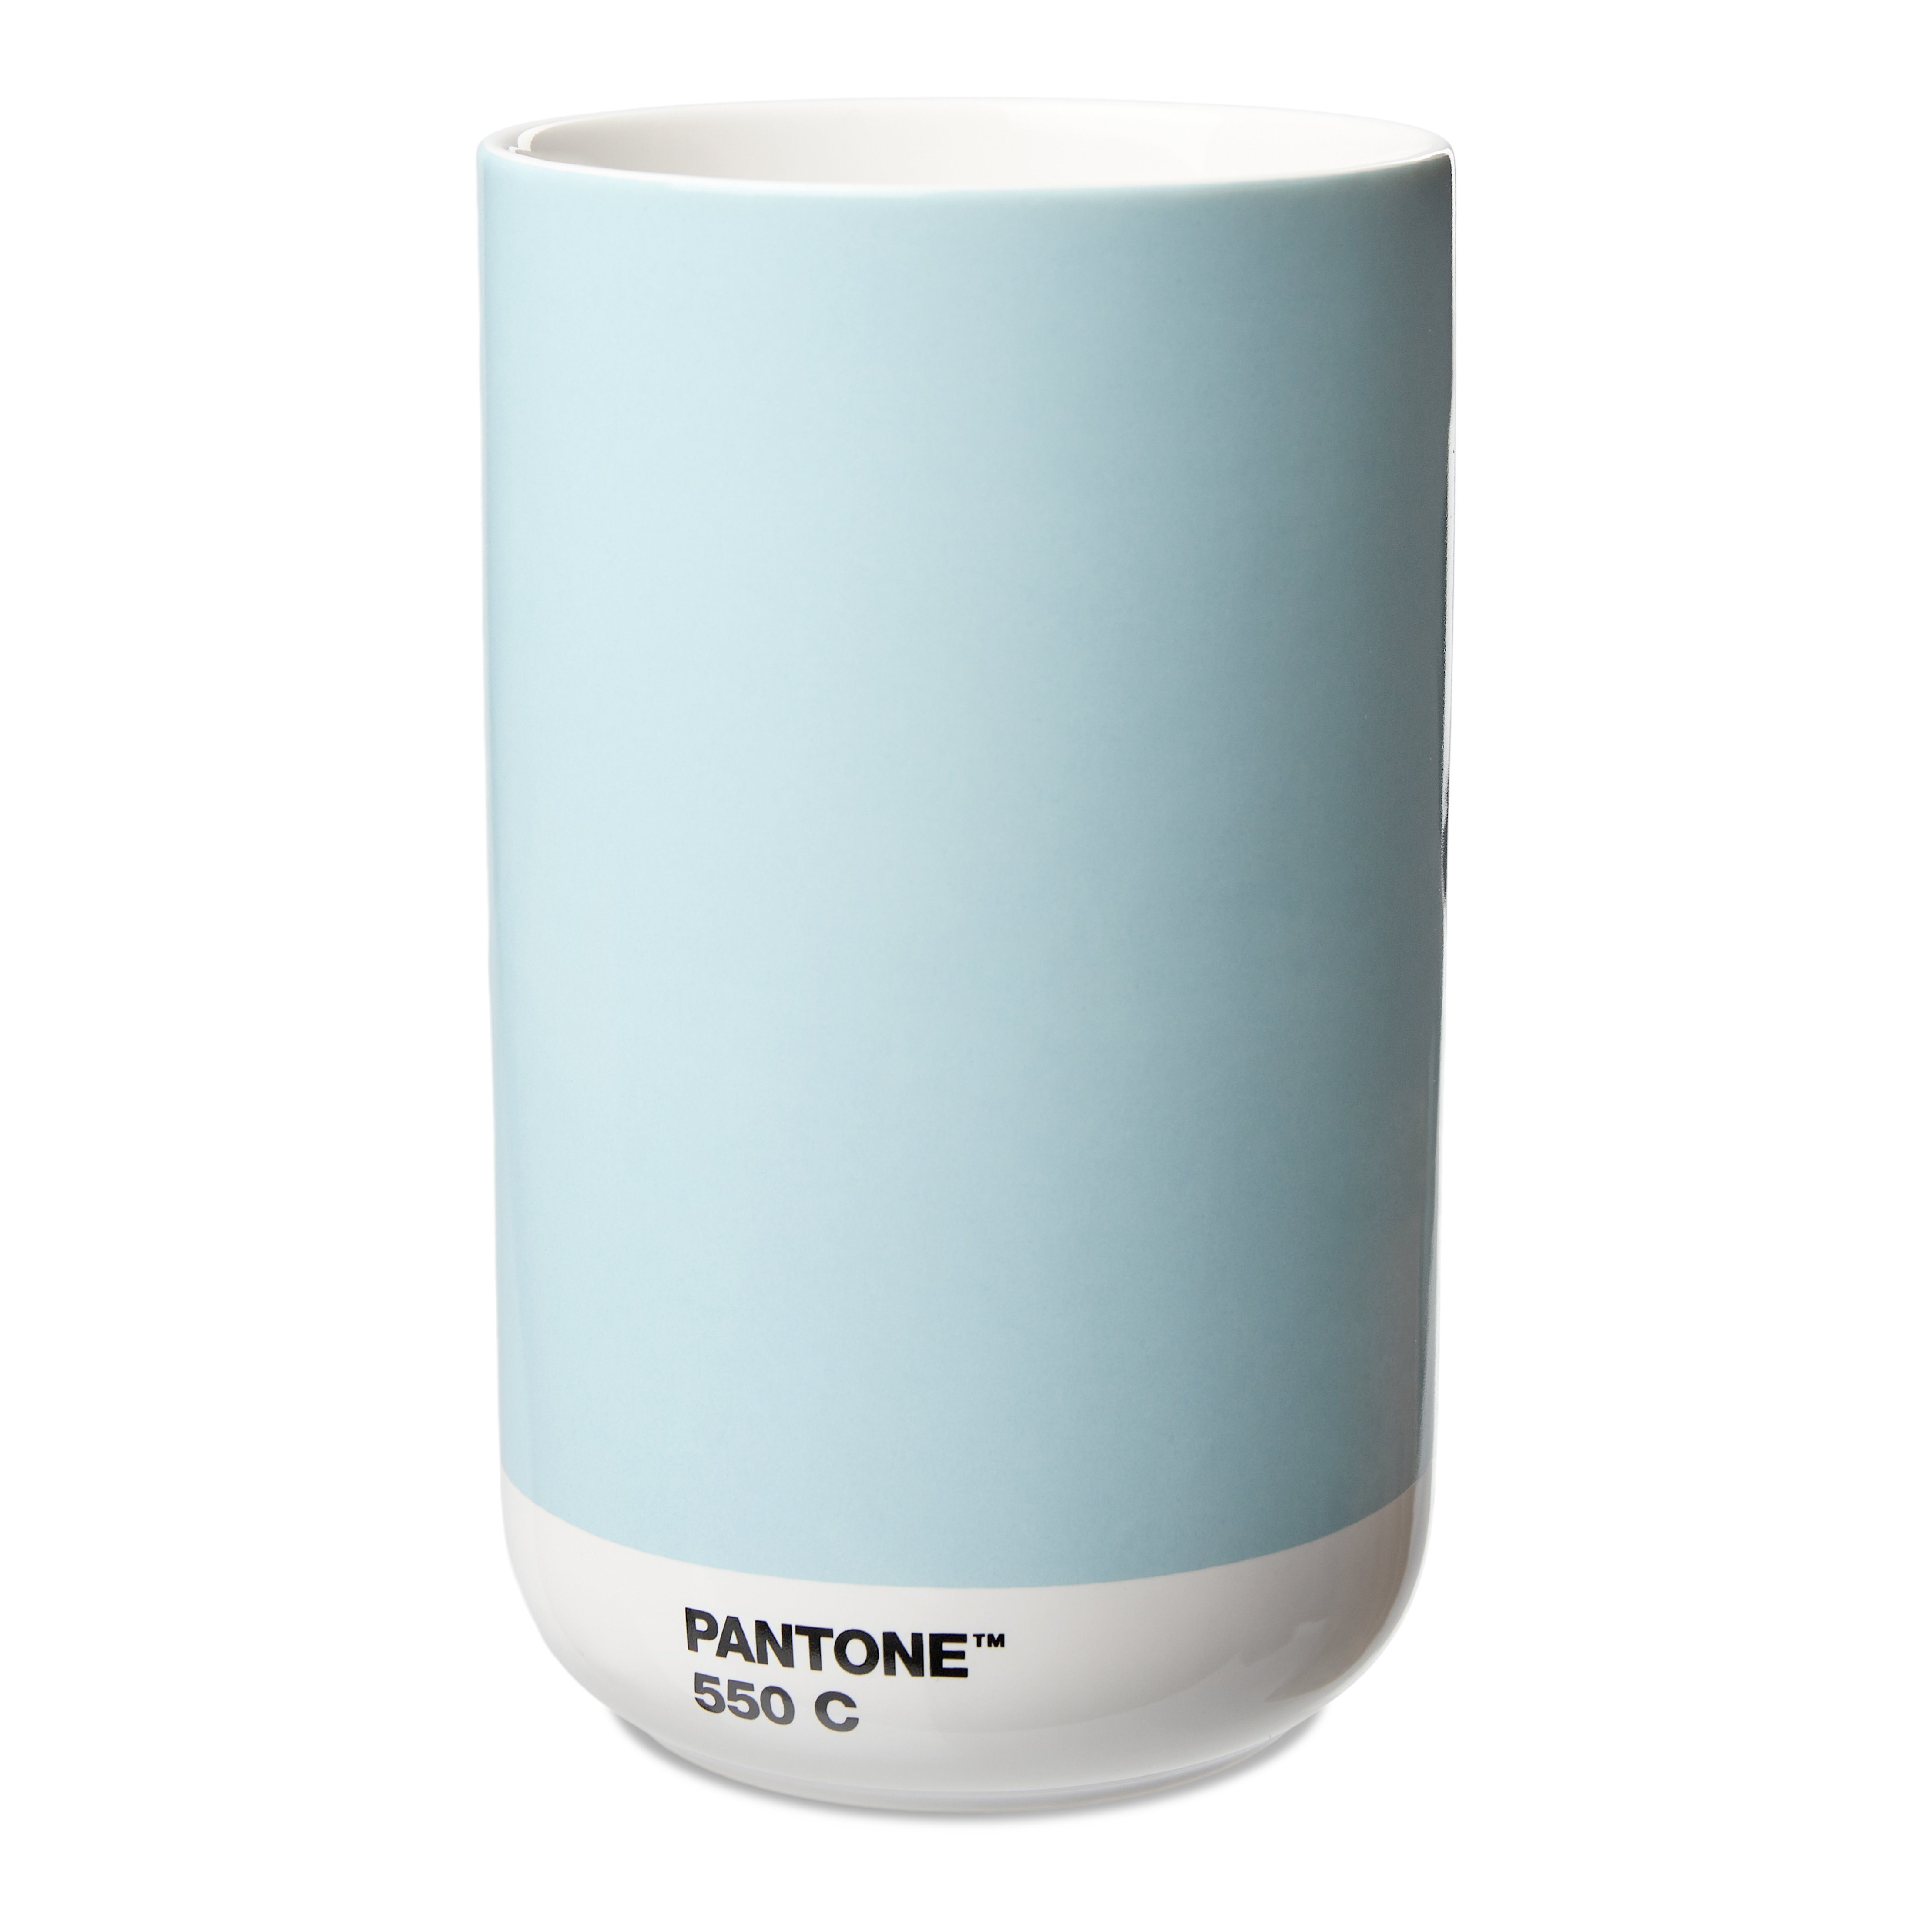 PANTONE Dekovase Mini Porzellan in 500ml Geschenkbox, Light Blue 550C Vase